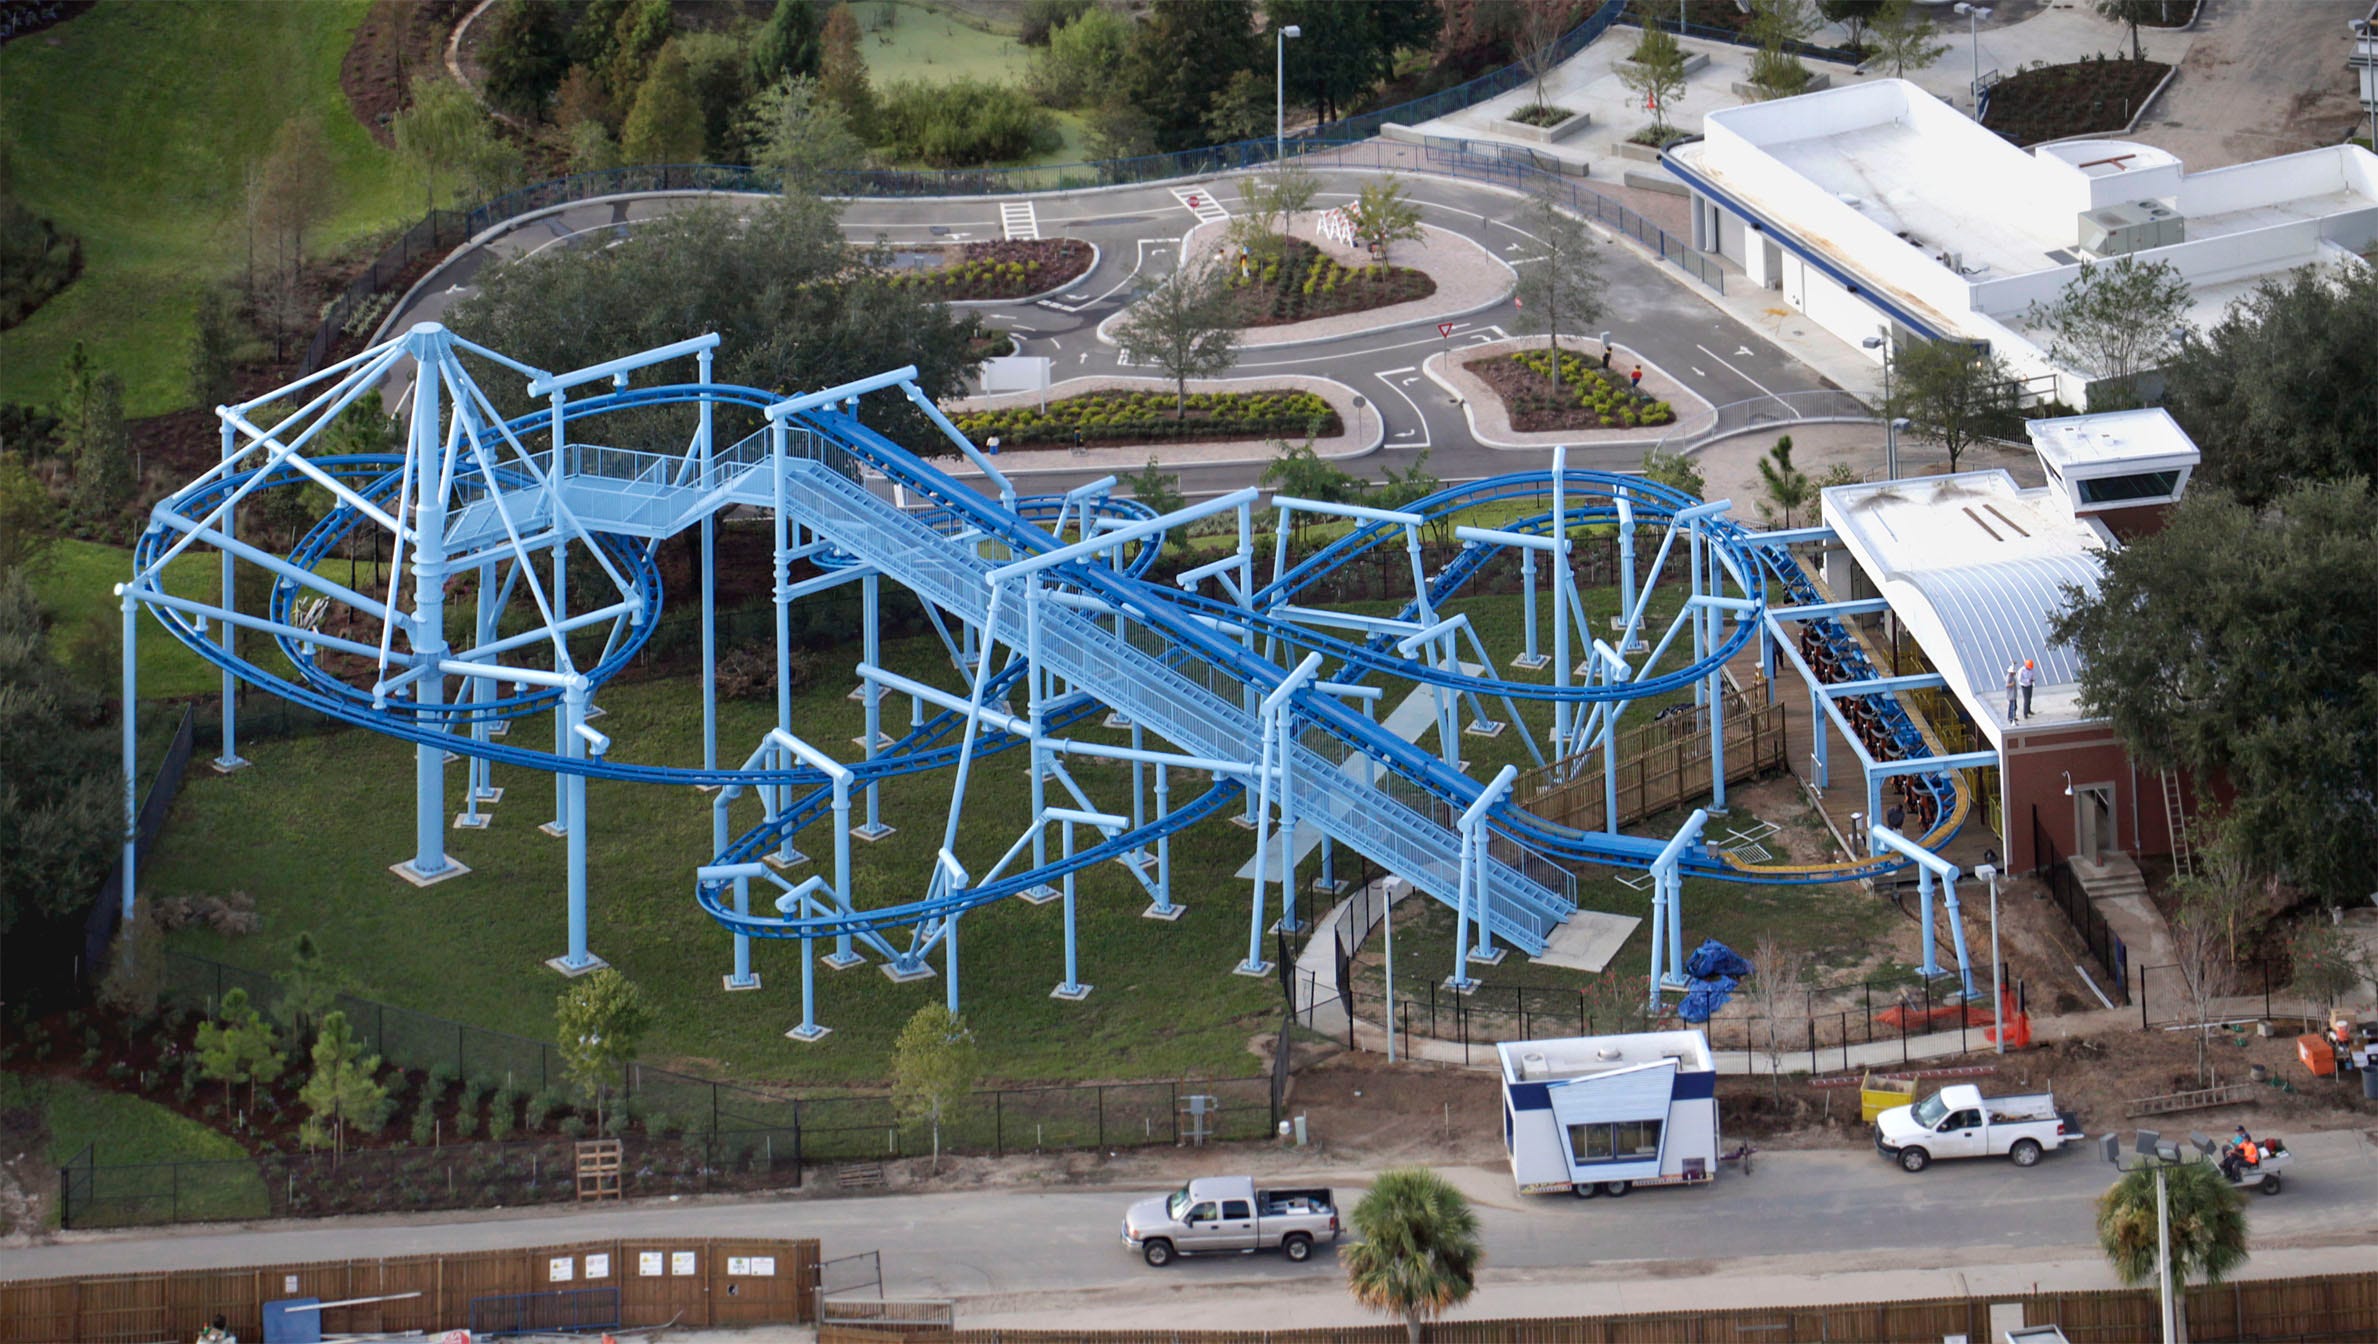 Legoland Florida's Flying School, the last remaining Cypress Gardens coaster, will close